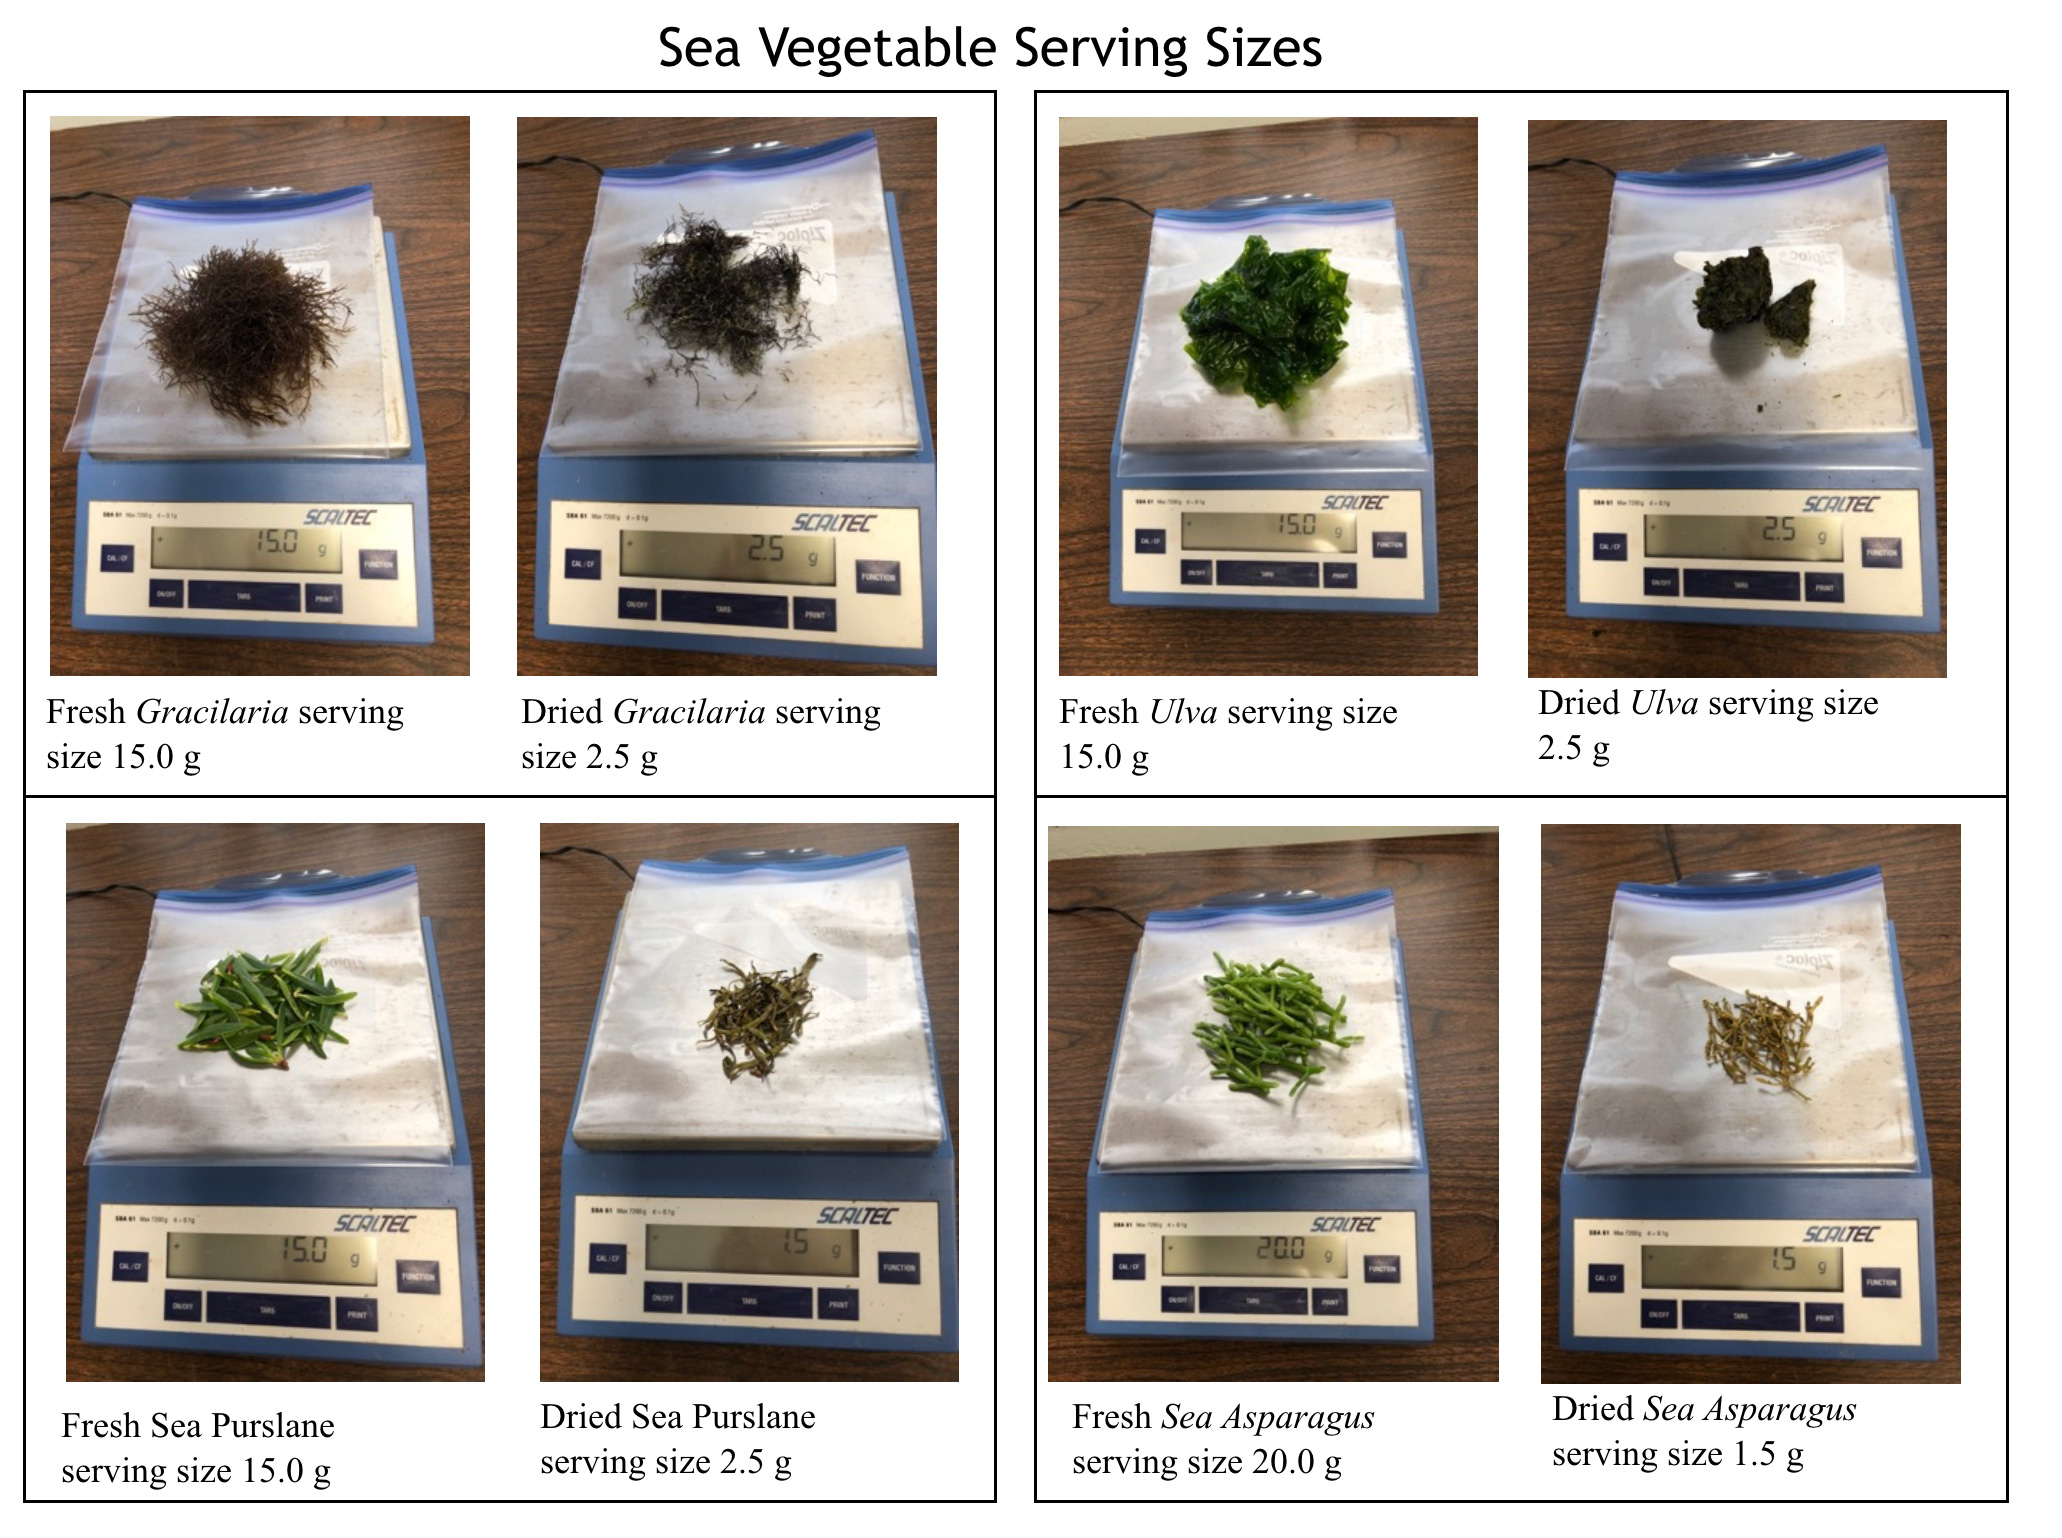 Sea Vegetables Serving Sizes